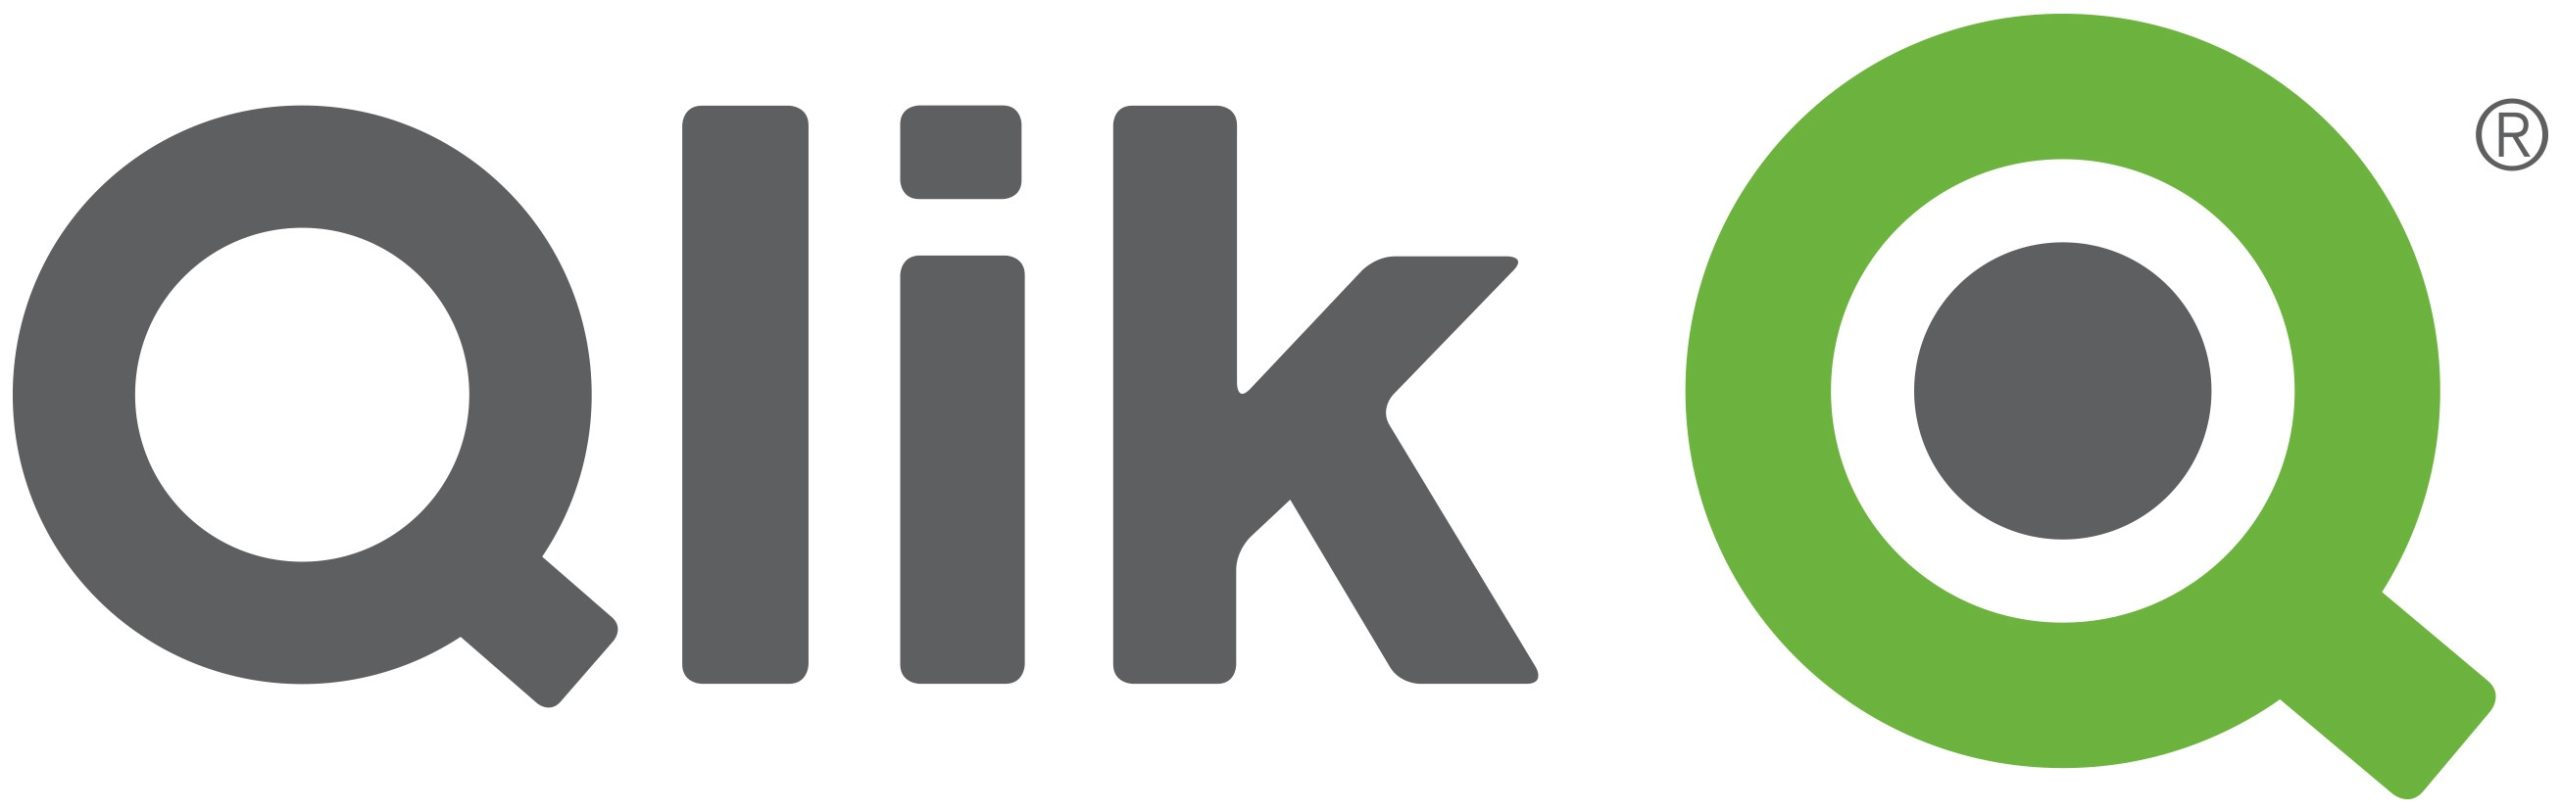 glik logo